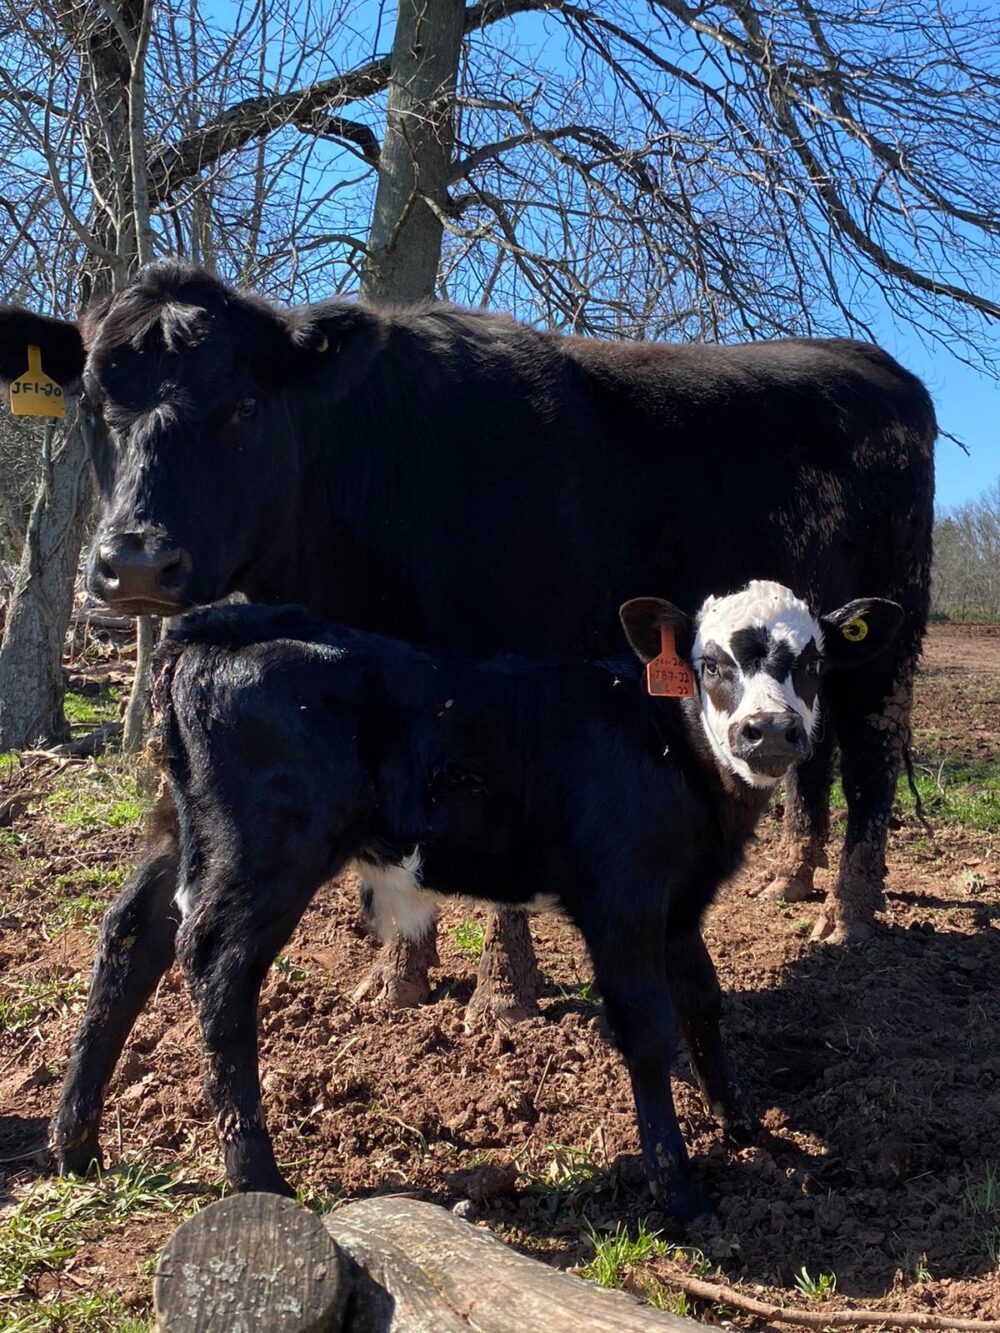 Nj farm calf enjoying the sunshine with Mom